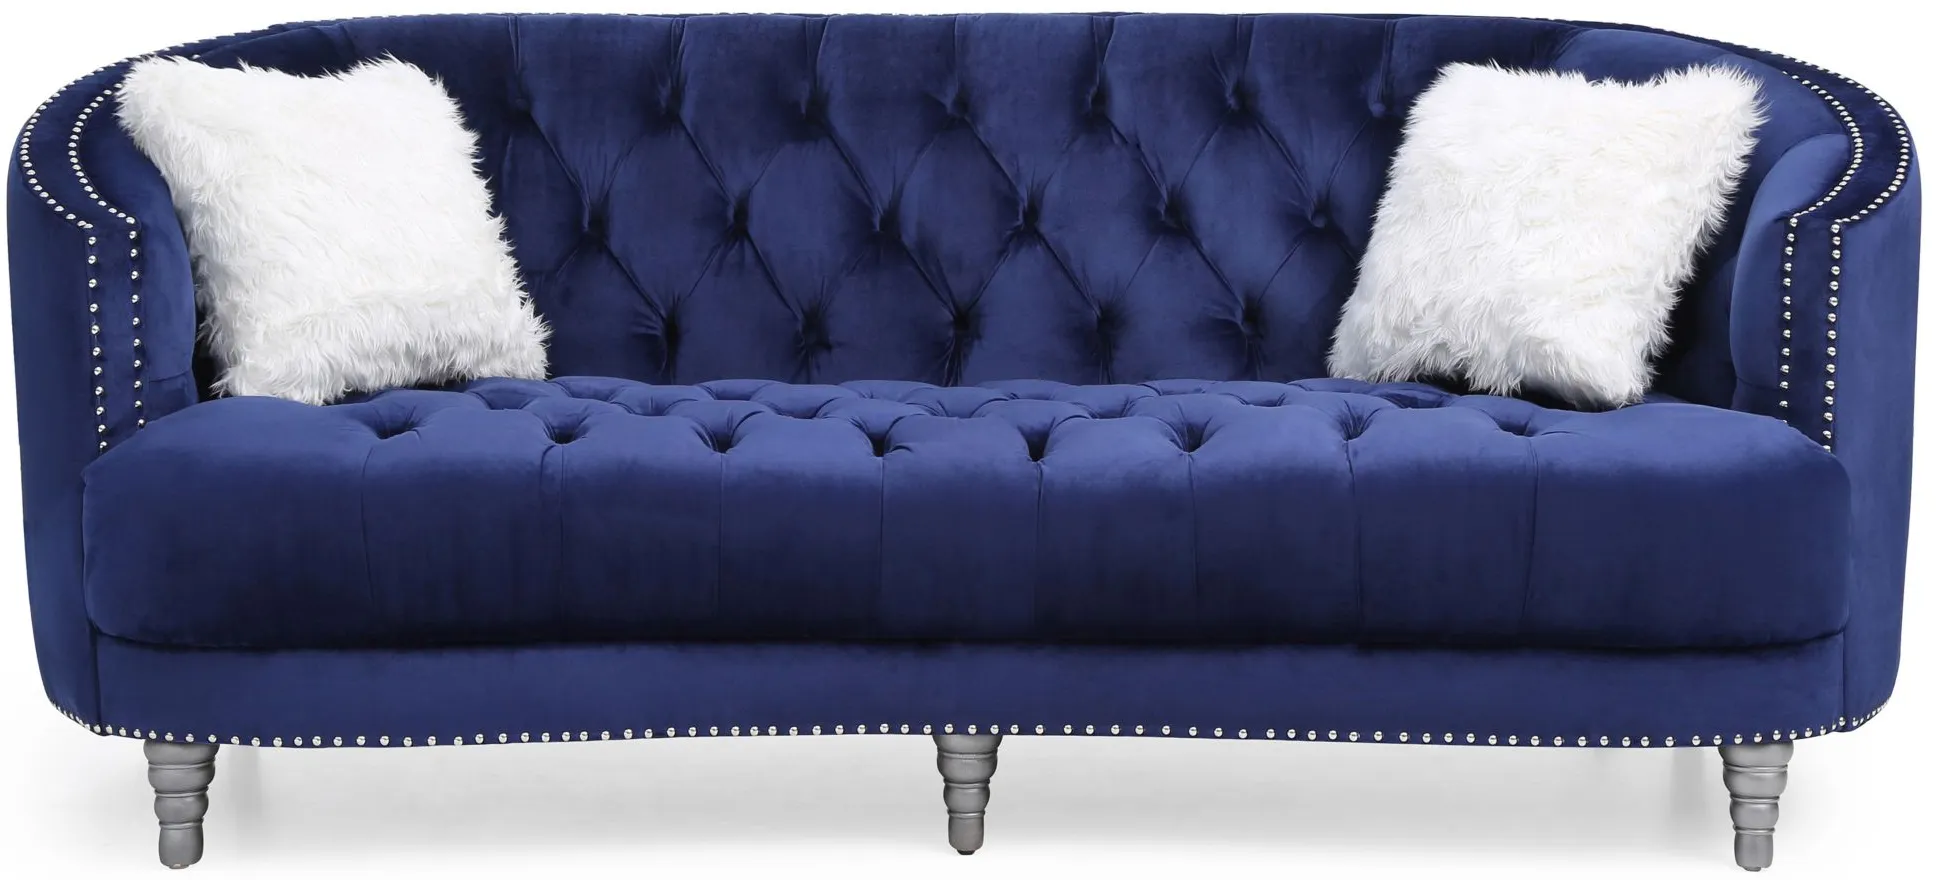 Dania Sofa in Navy Blue by Glory Furniture